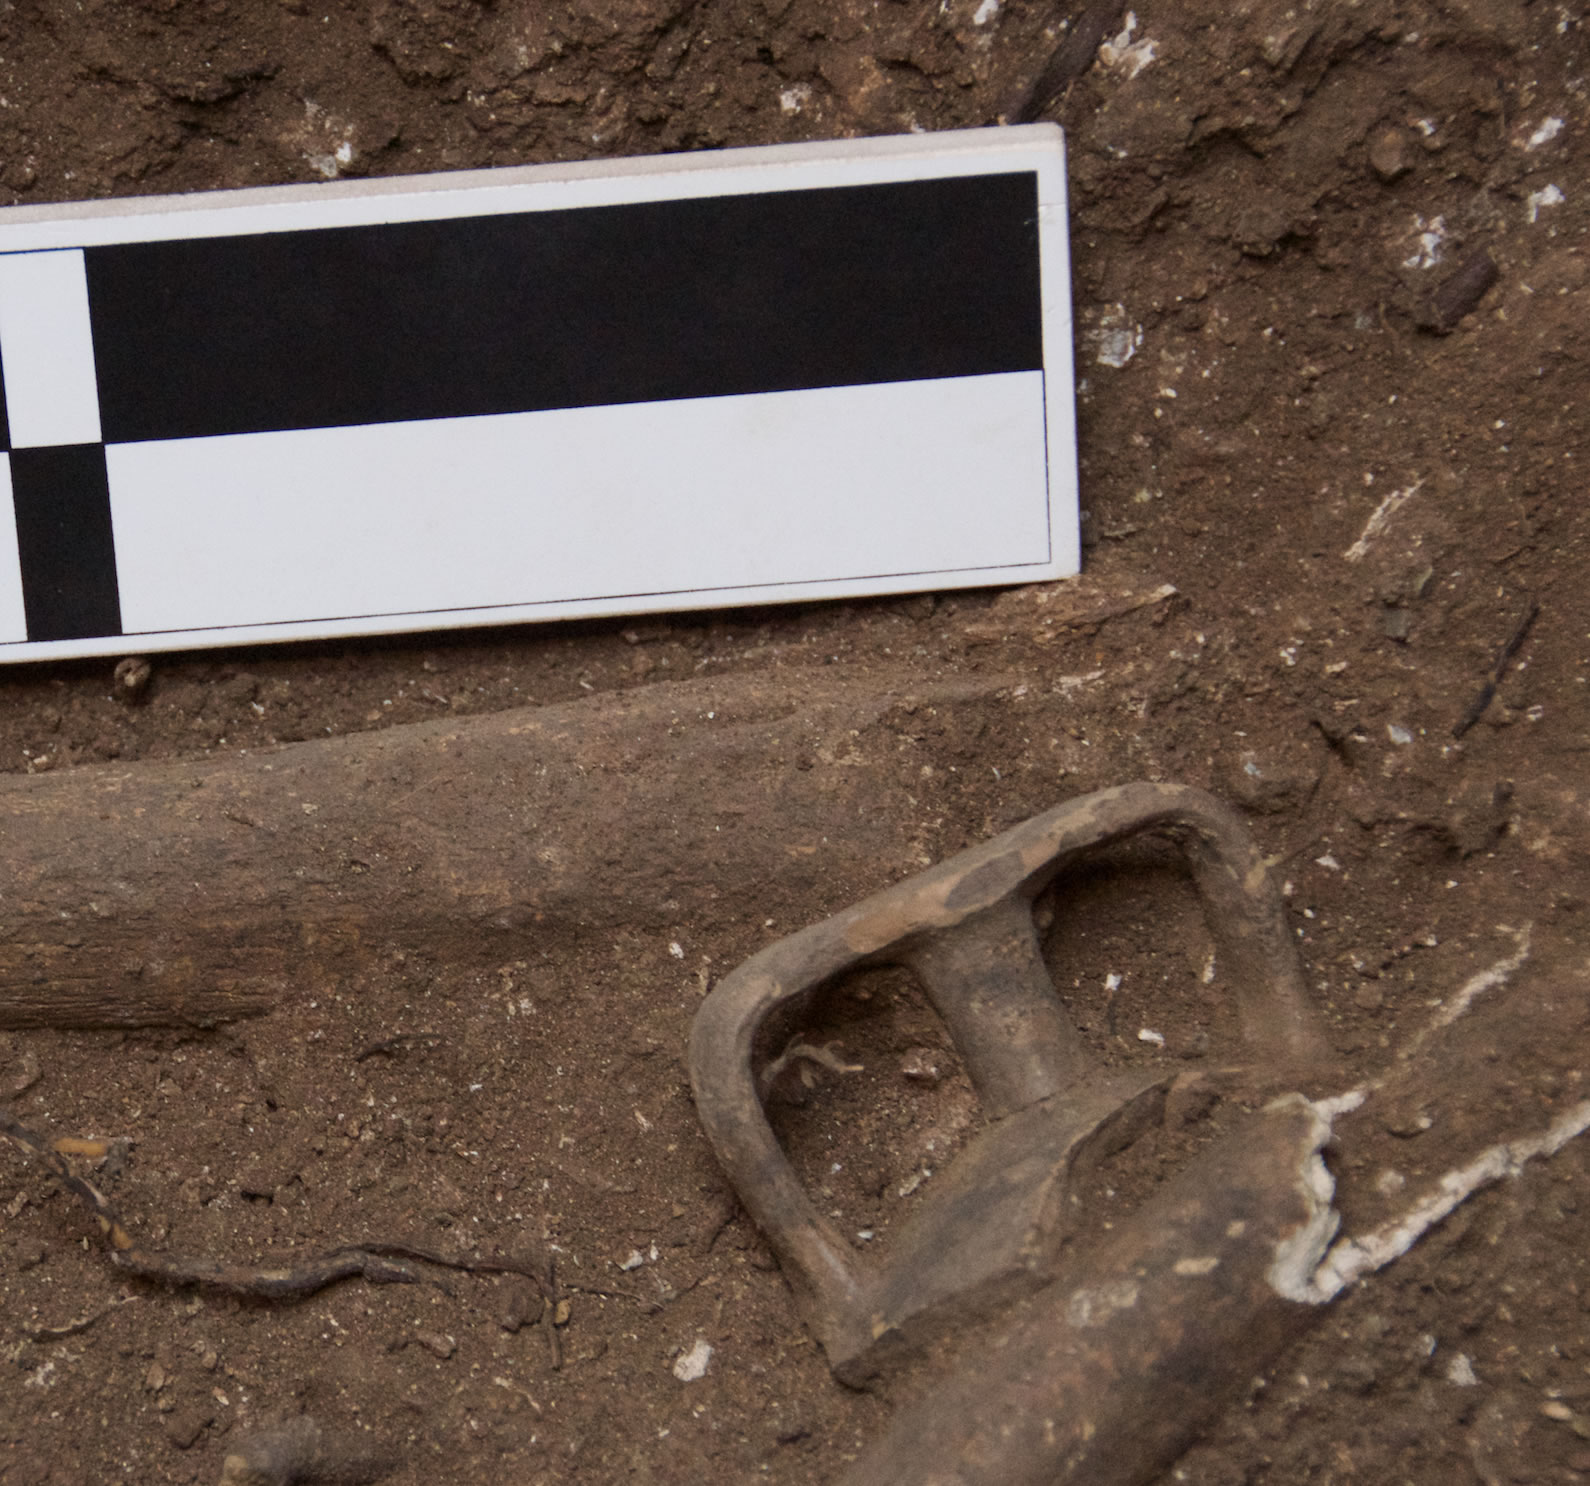 Part of Mycenaean stirrup jar found with human remains